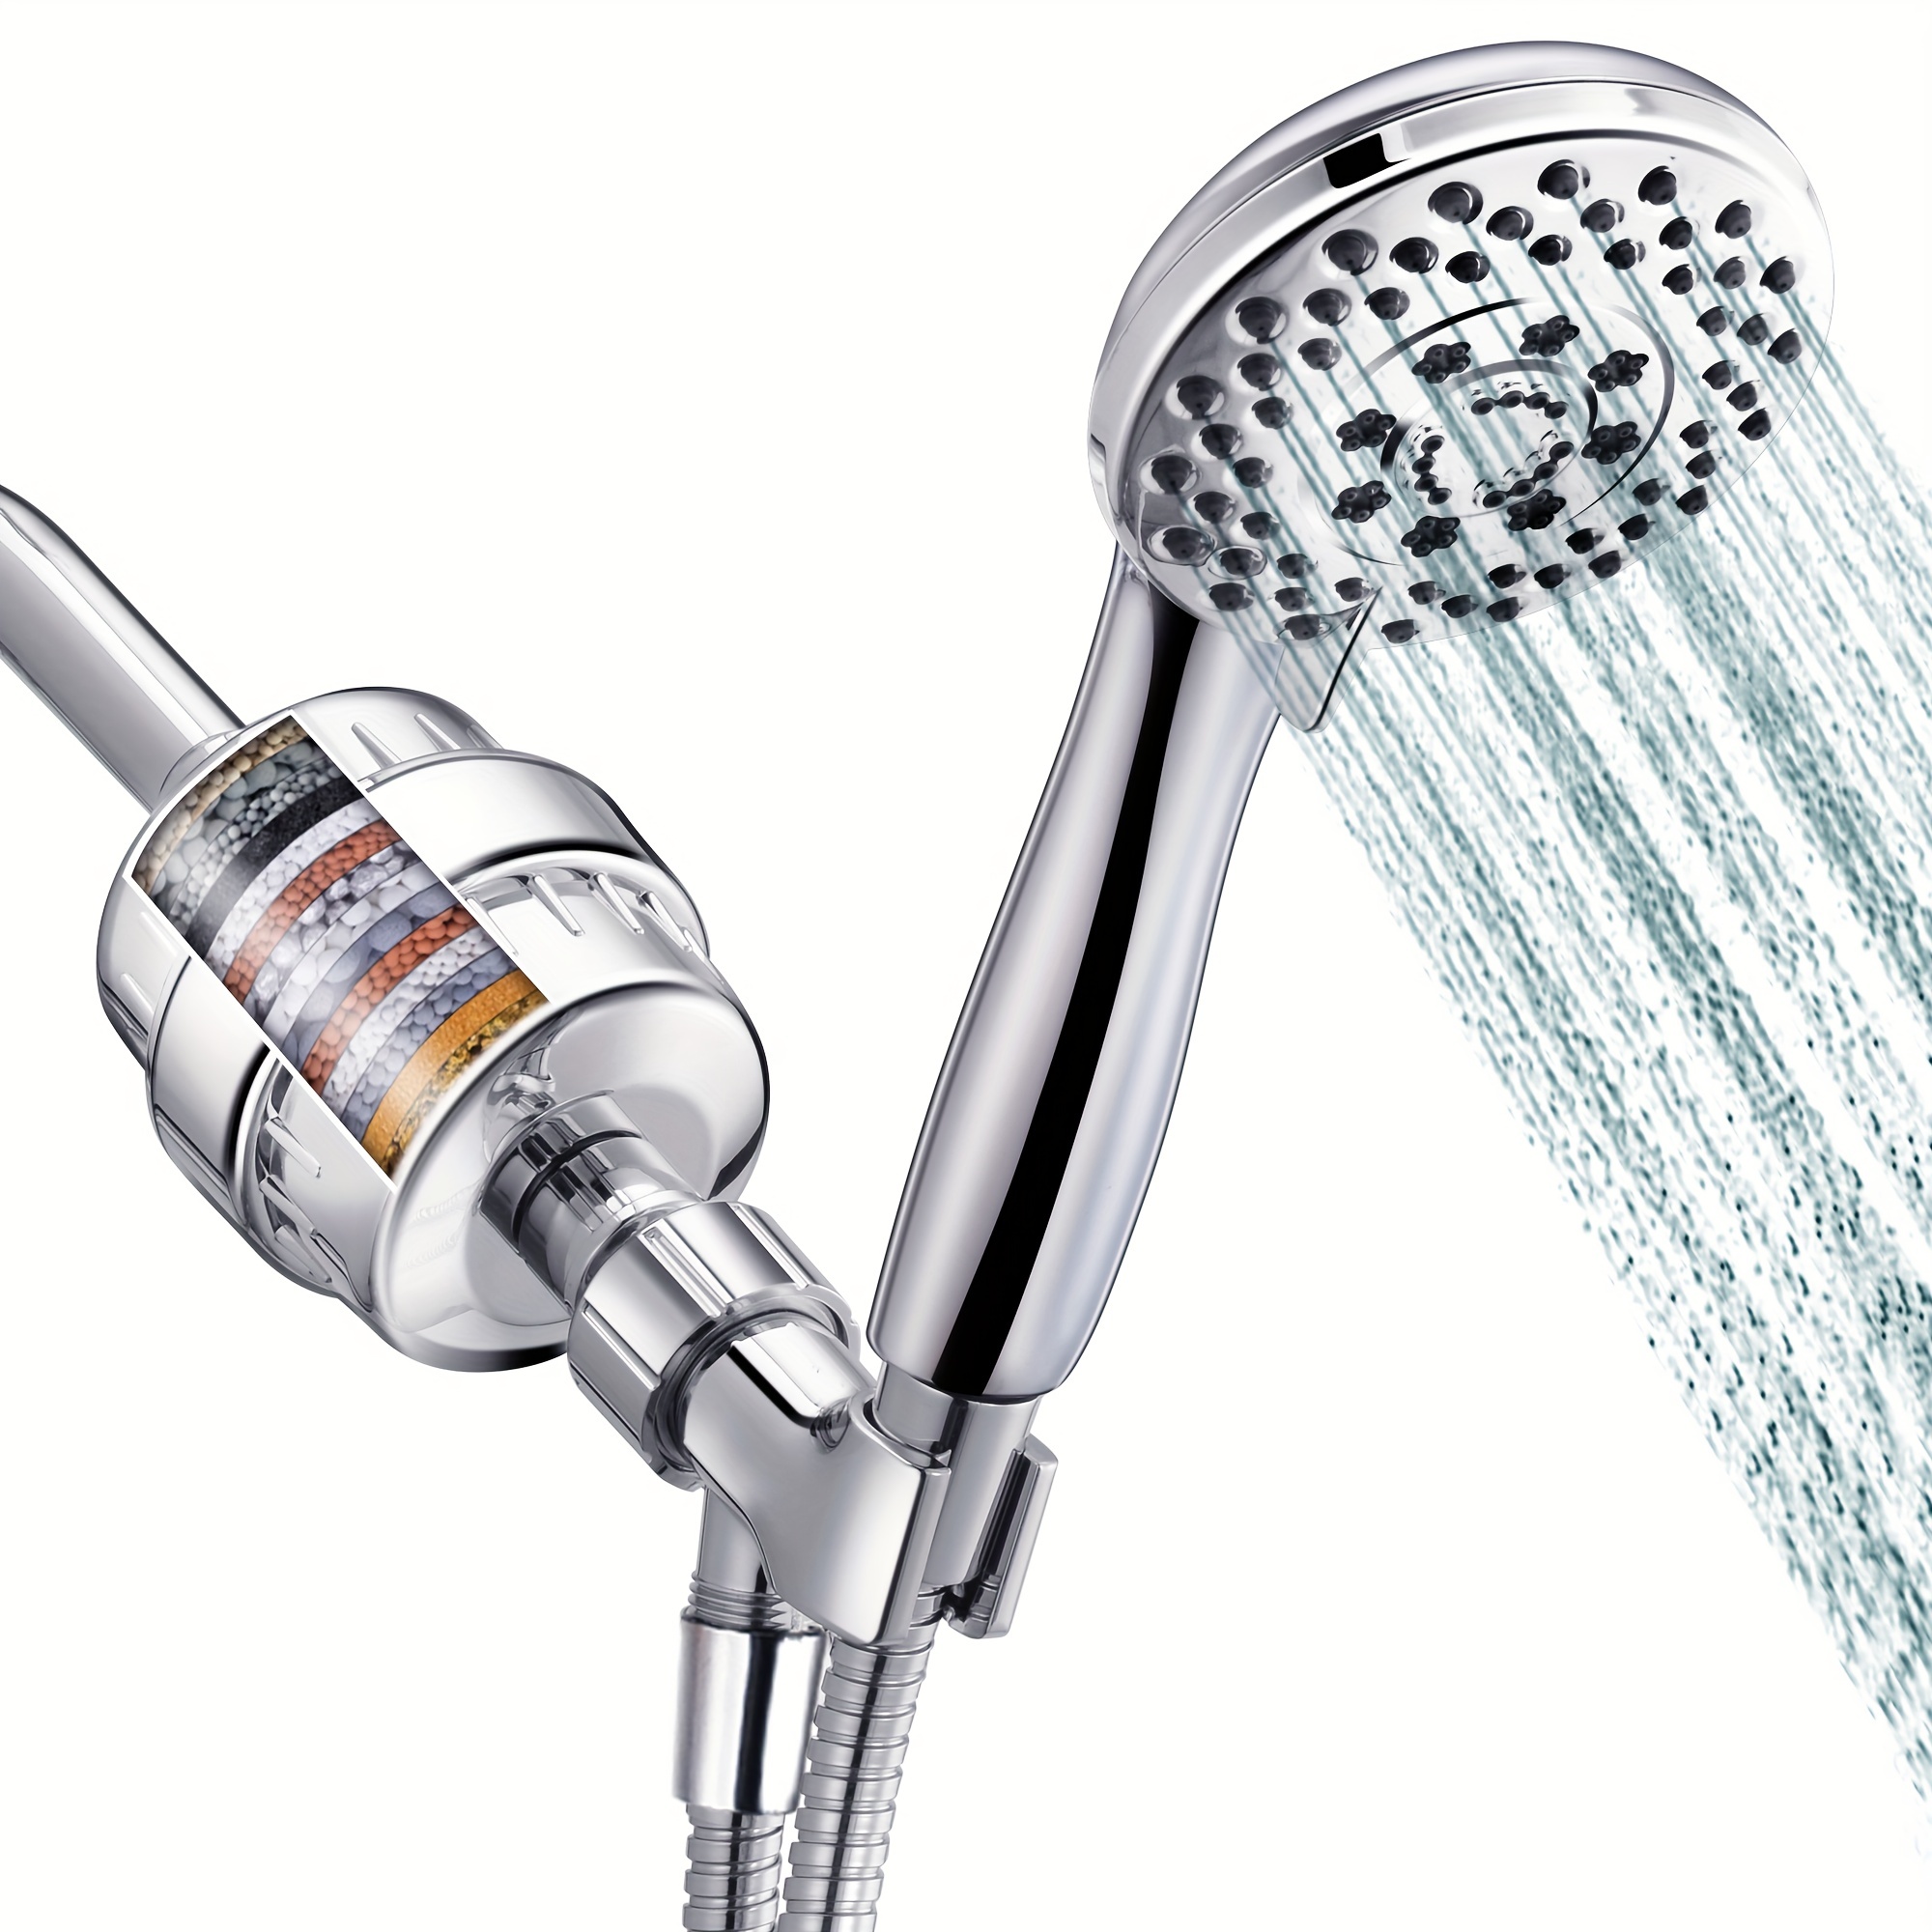 Filtro de cabezal de ducha para agua dura, Suavizador de agua de ducha de  alto rendimiento, Cabezal de ducha filtrado para